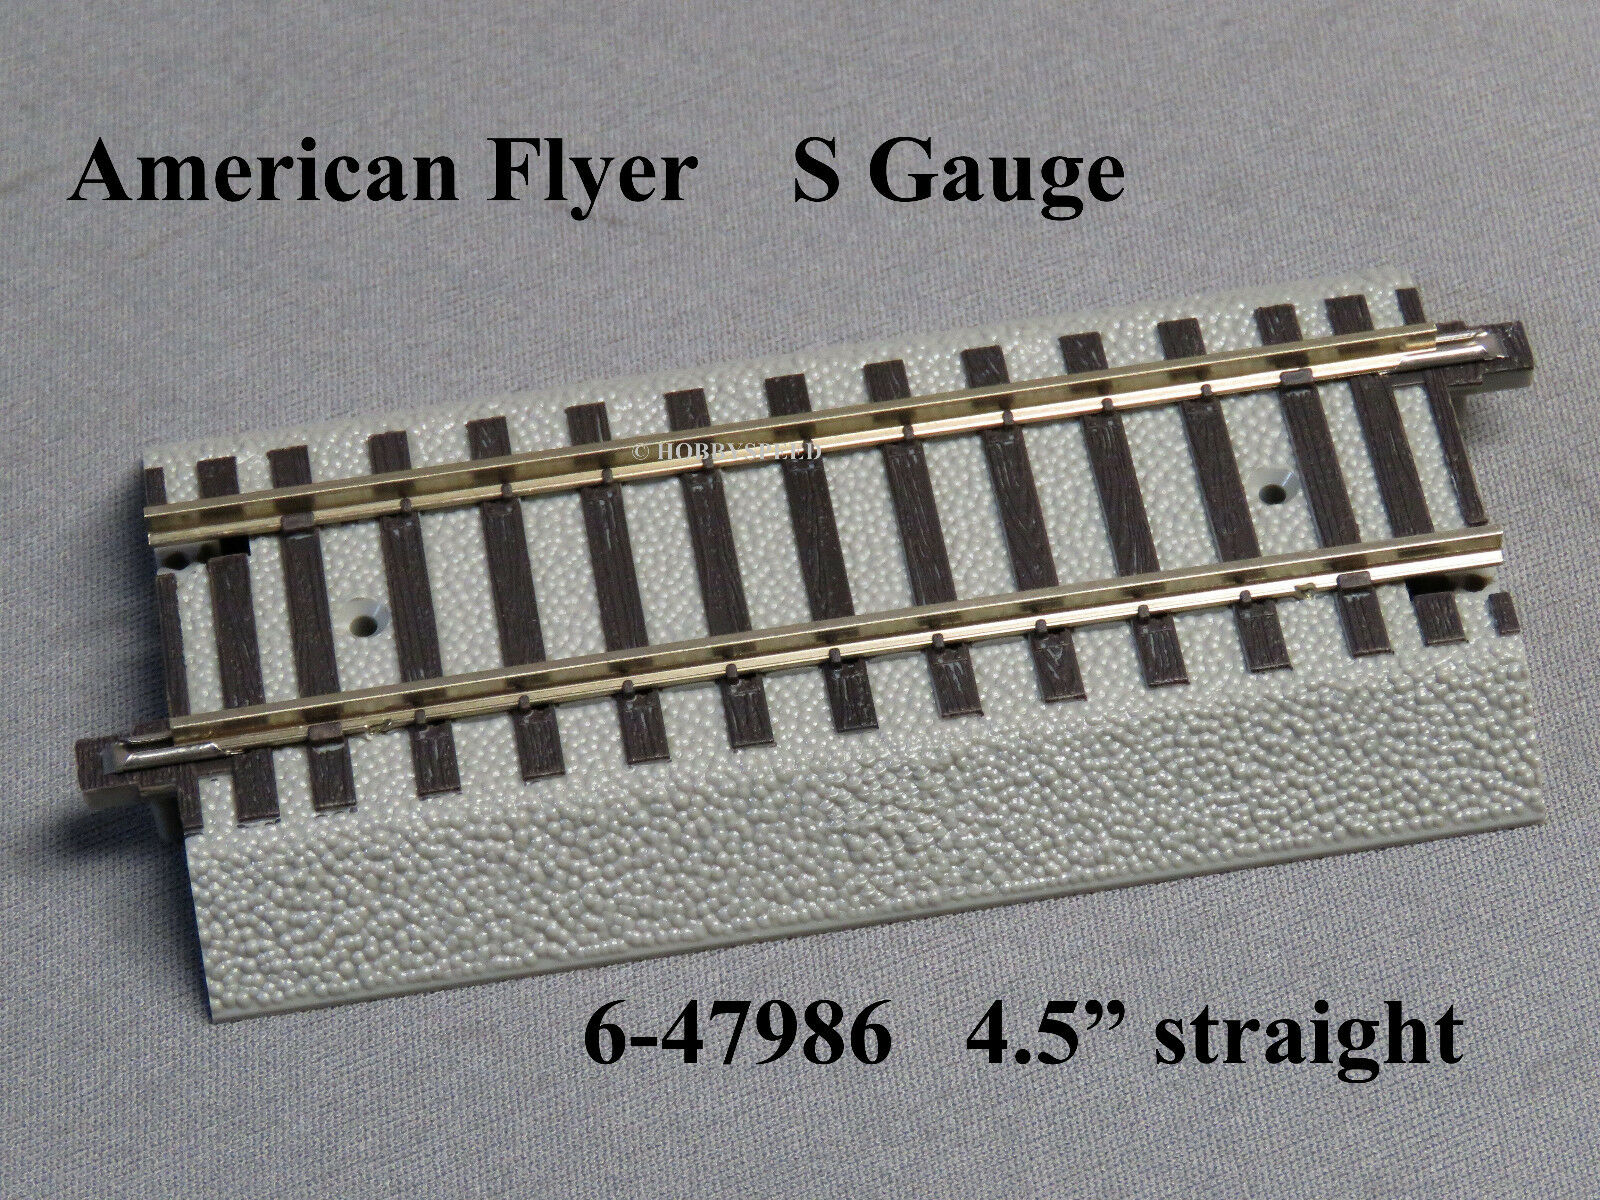 Lionel American Flyer Fastrack 4.5" Straight S Gauge Af 2 Rail Train 6-47986 New